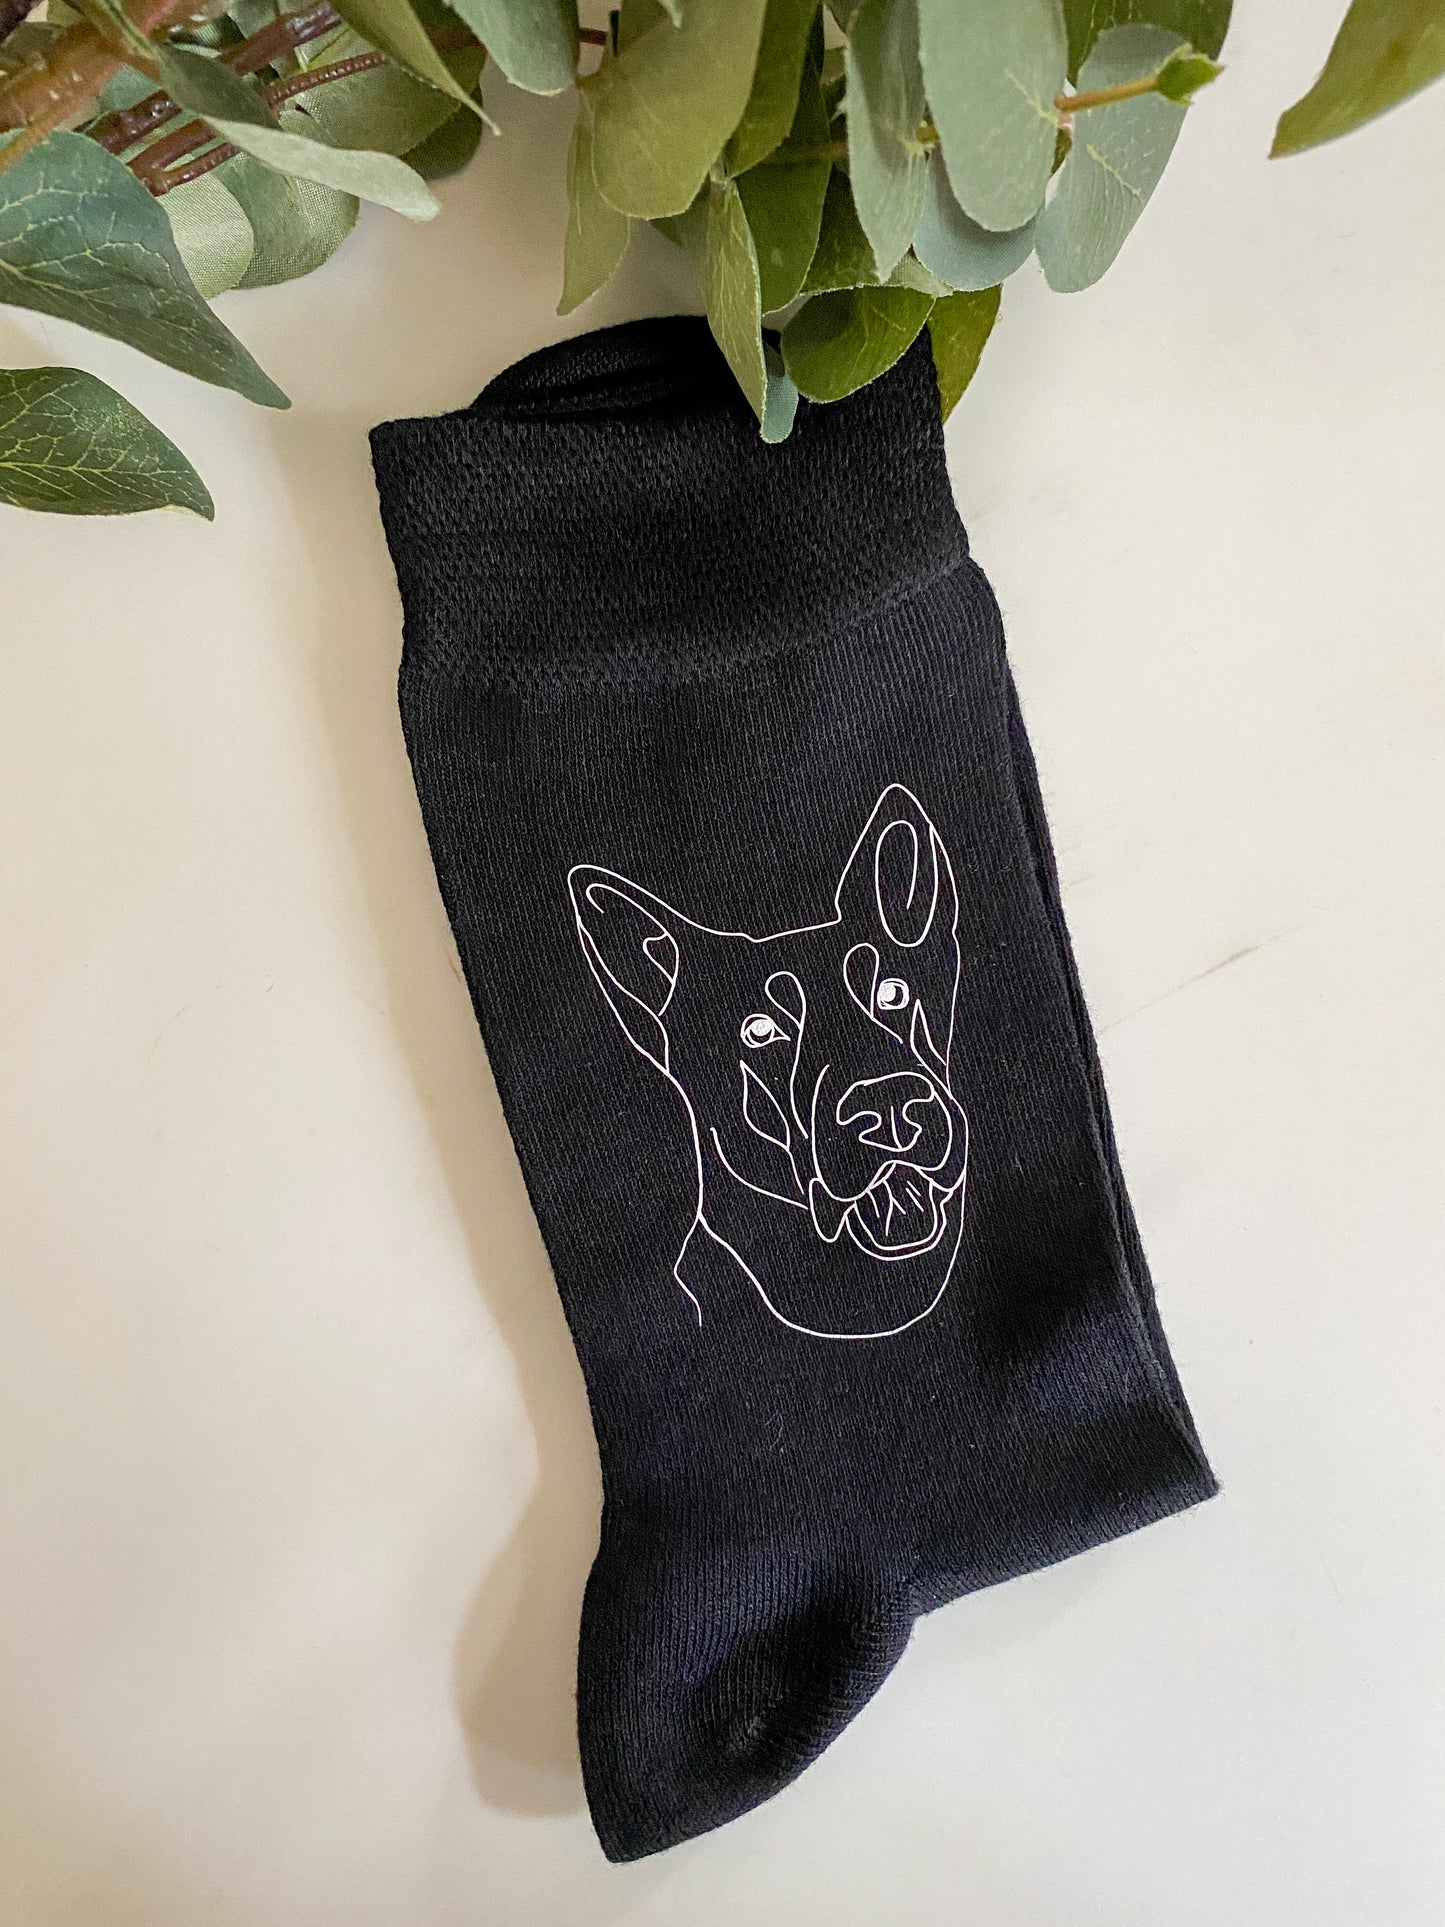 Personalised Pet Socks